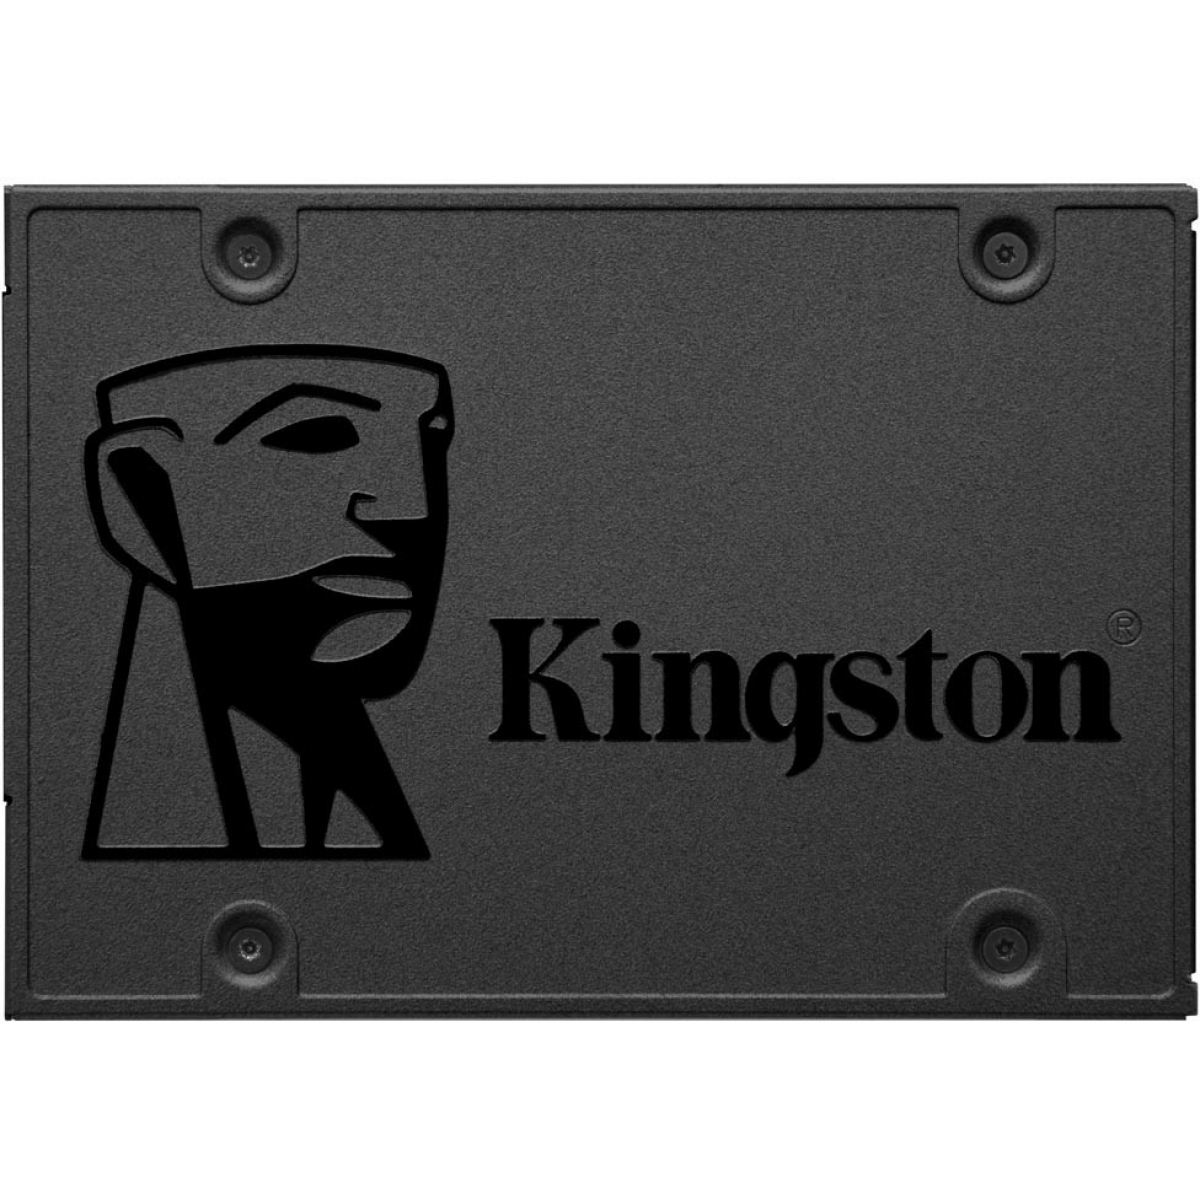 SSD Kingston A400, 480GB, Sata III, Leitura 500MBs Gravação 450MBs, SA400S37/480G - Open Box